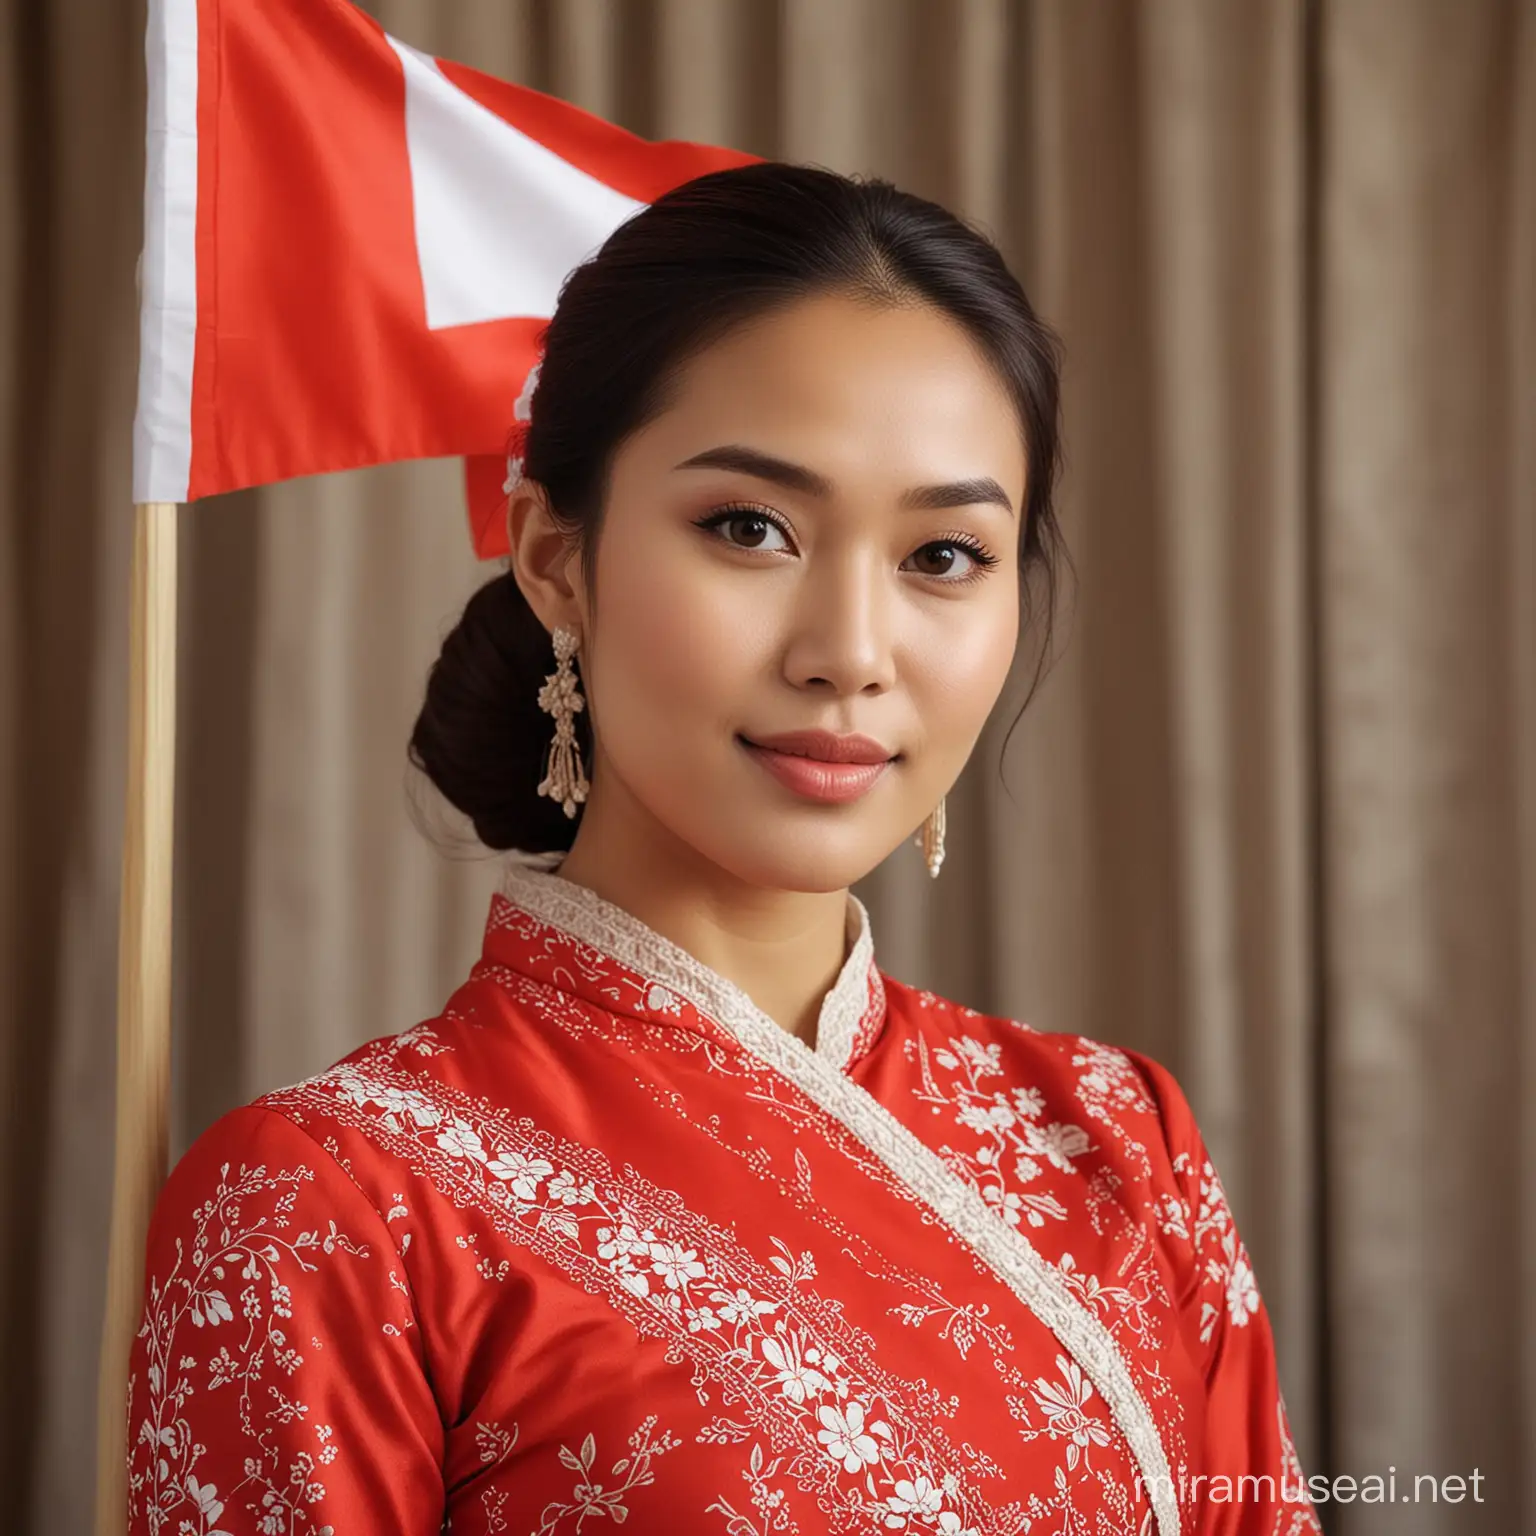 Wanita indonesia, cantik, kulit putih bersih, rambut panjang di sanggul, memakai kebaya warna merah cerah, dengan latar belakang bendera merah putih